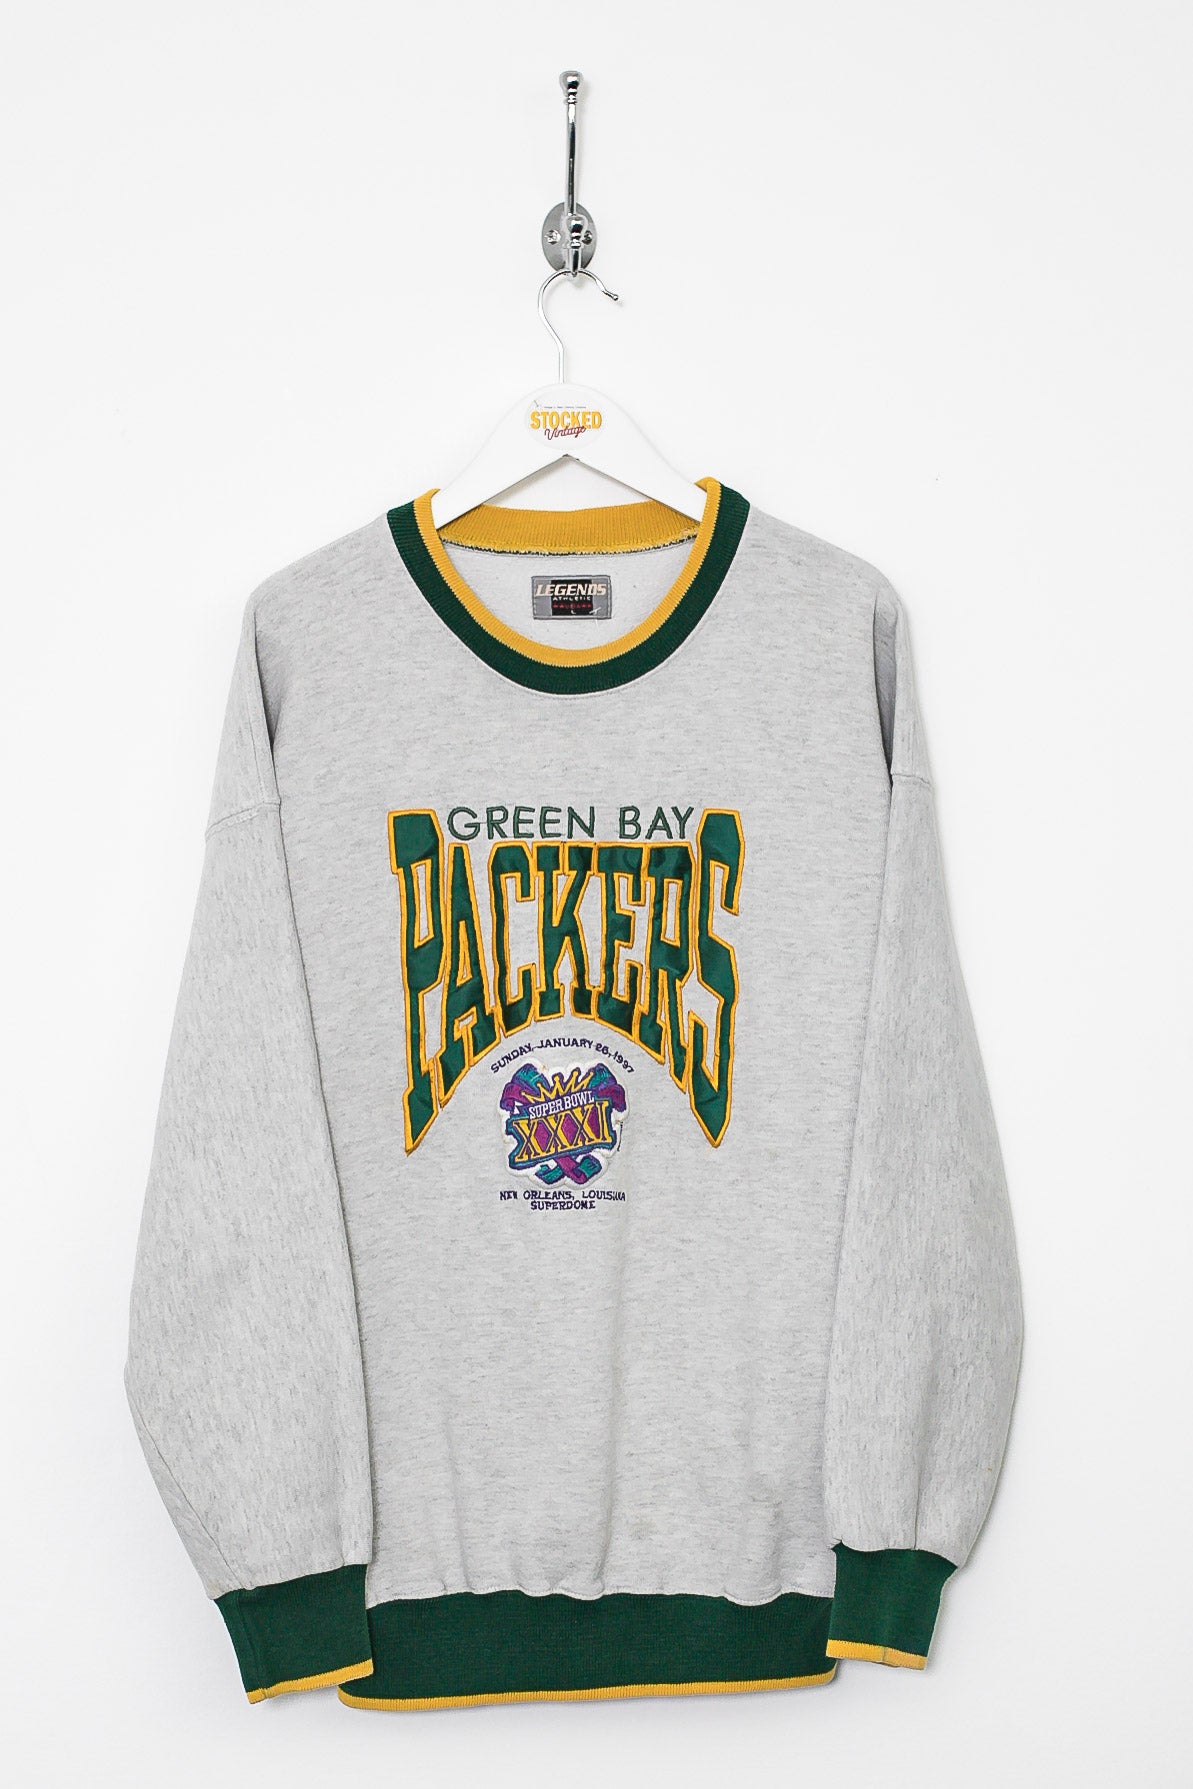 90s Legends NFL Green Bay Packers Sweatshirt (M)